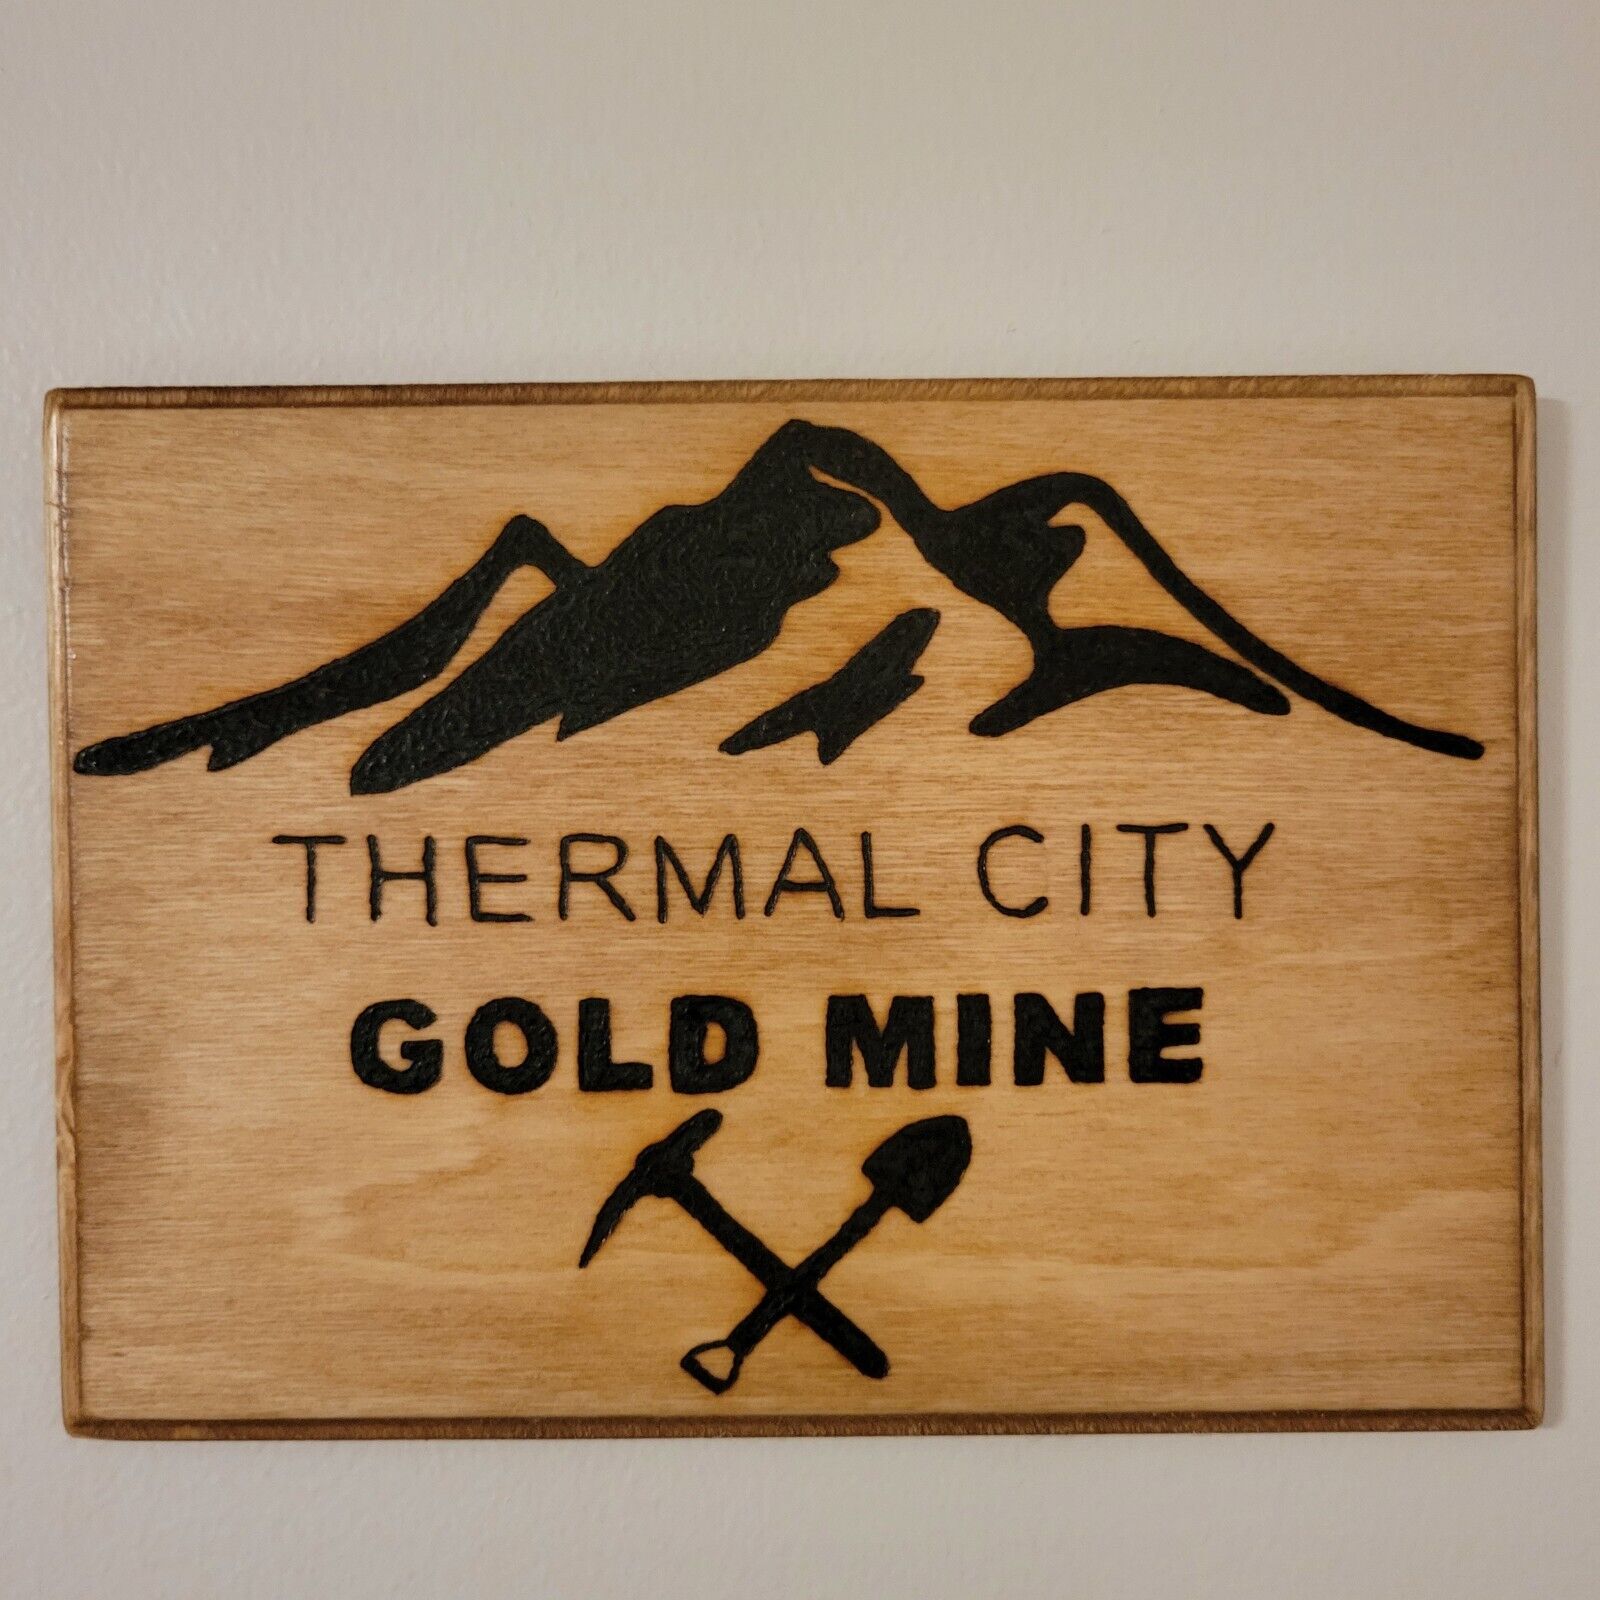 Thermal City Gold Mine - Handmade Wooden Souvenir Plaque - Solar Pyrography Art 